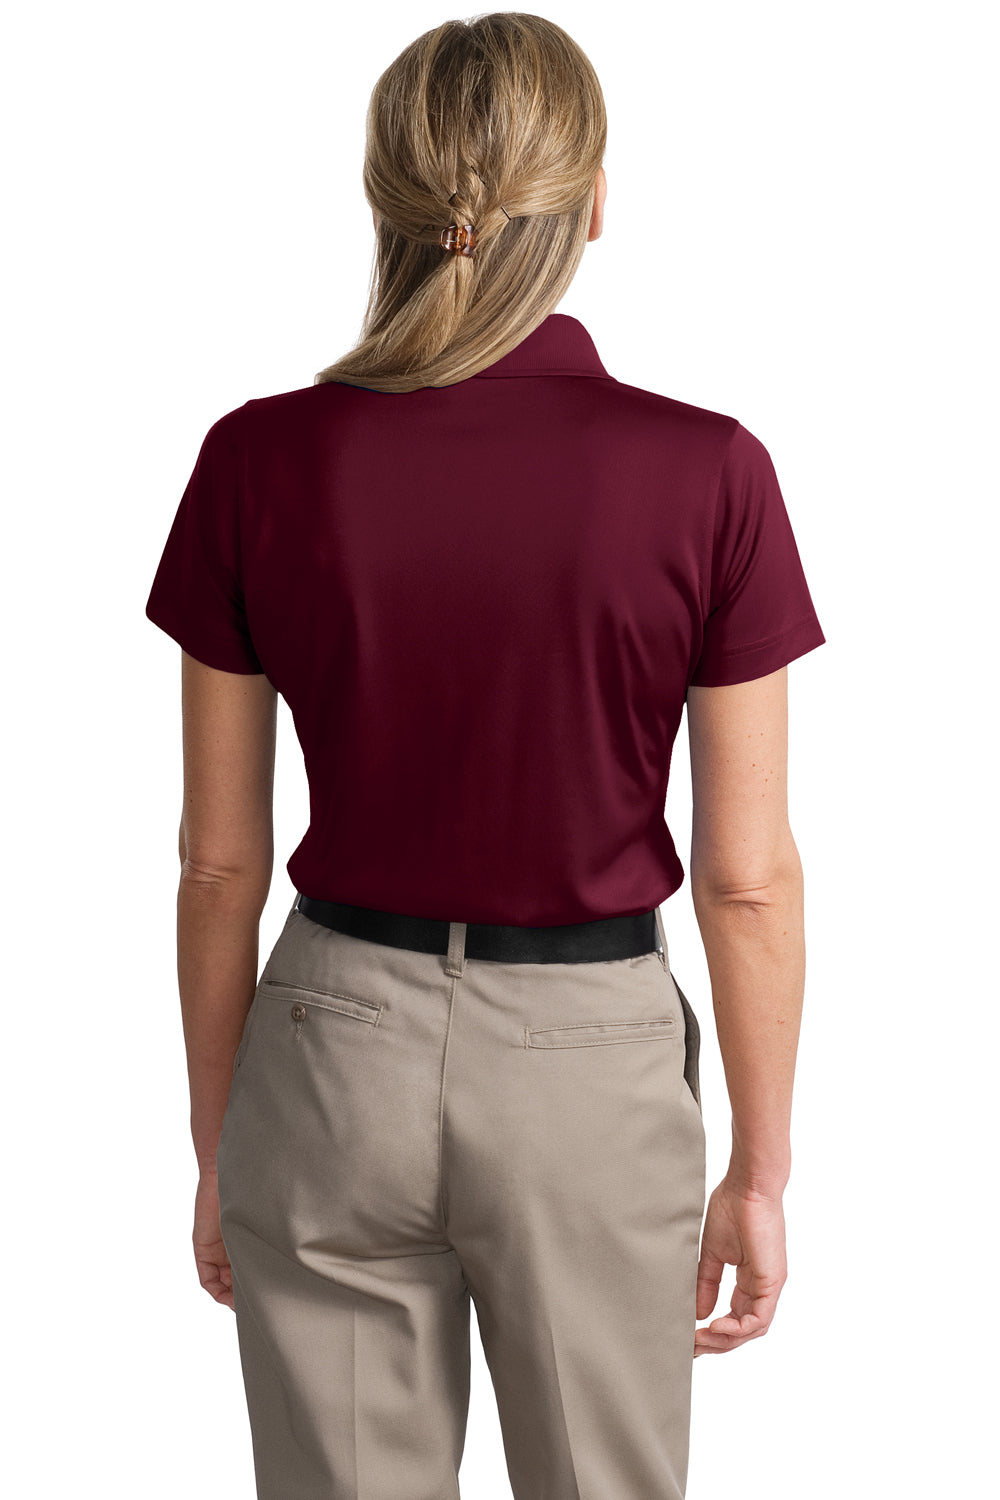 CornerStone CS413 Womens Select Moisture Wicking Short Sleeve Polo Shirt Maroon Back